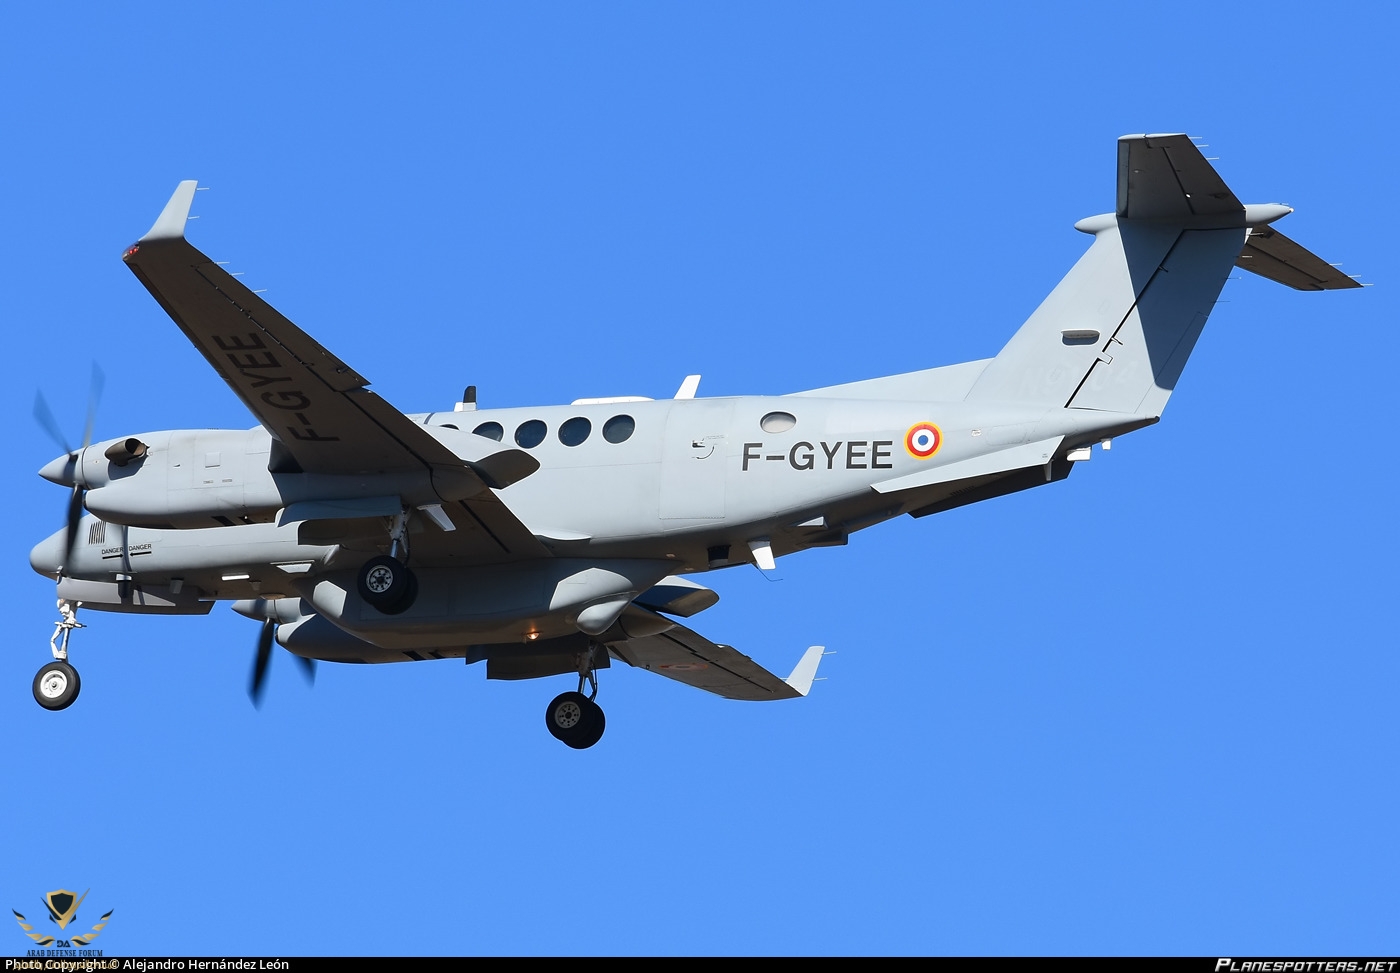 f-gyee-arme-de-lair-french-air-force-beechcraft-350-super-king-air_PlanespottersNet_972183_04f...jpg